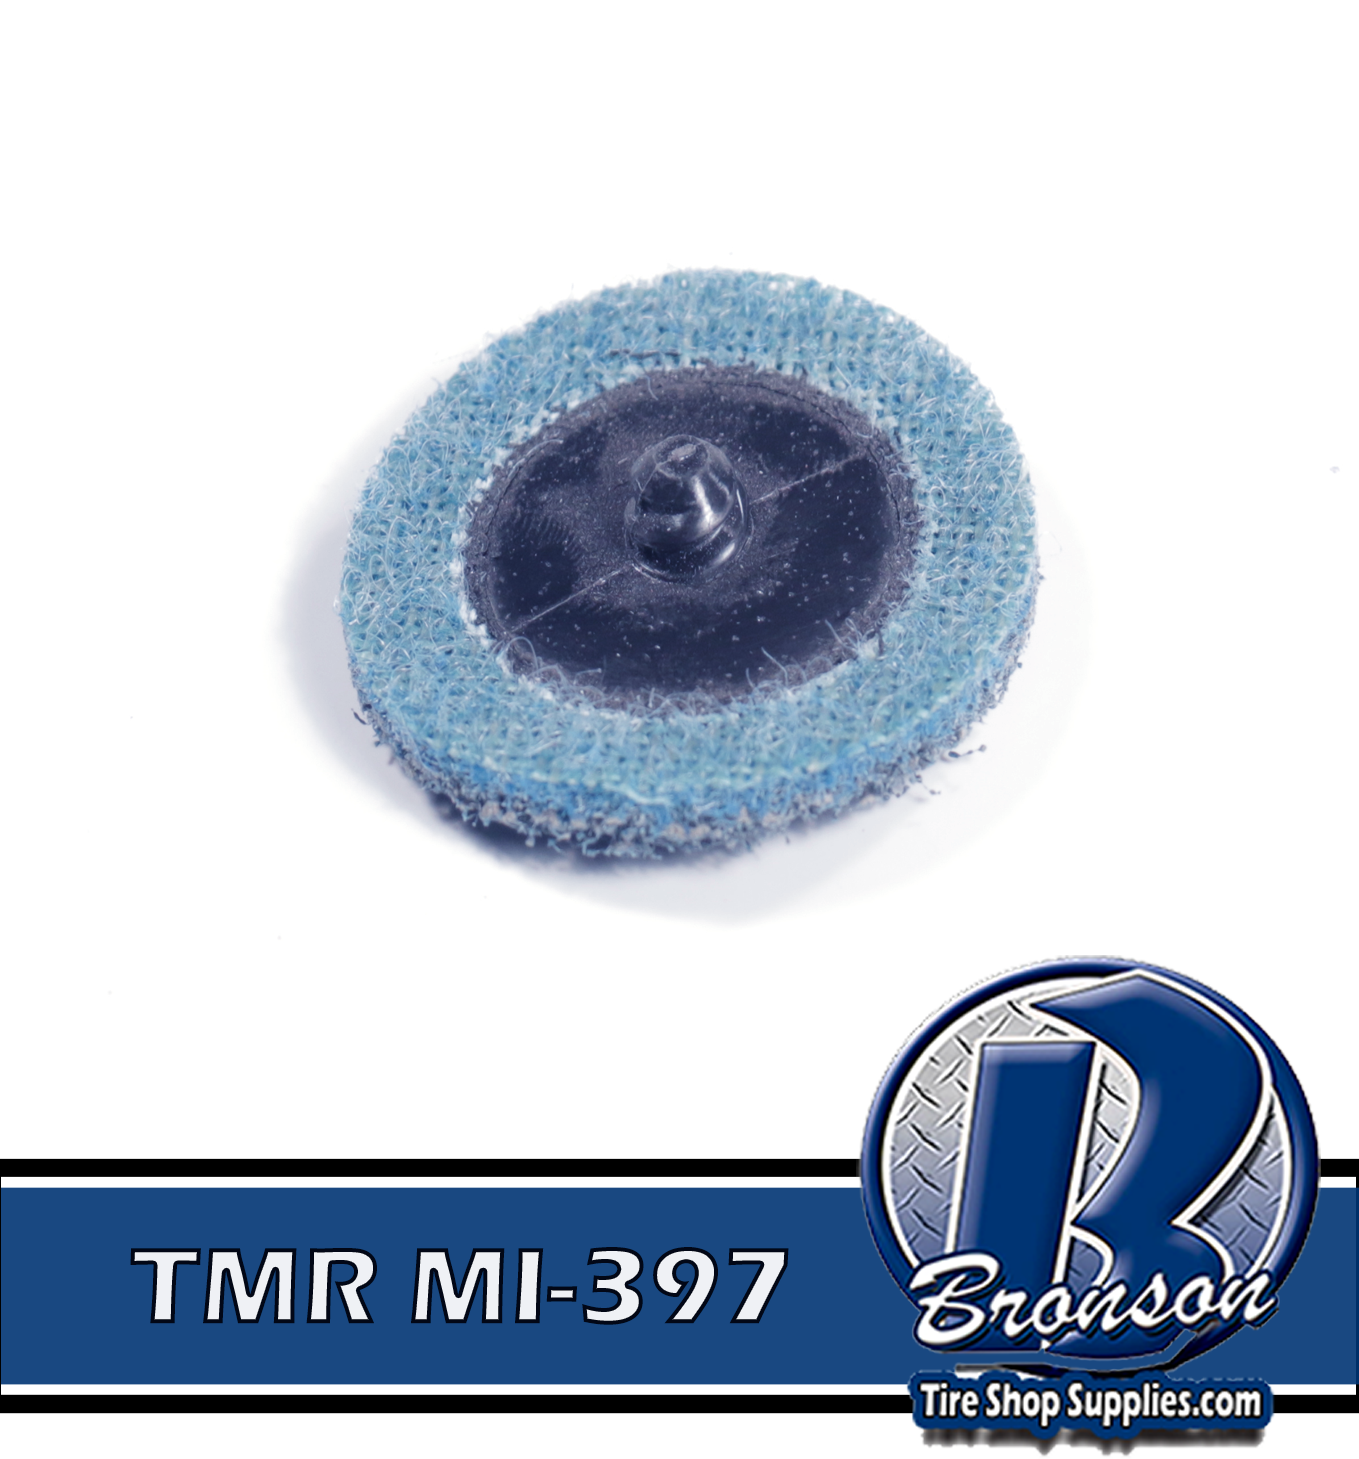 TMR MI-397 2' SURFACE CON